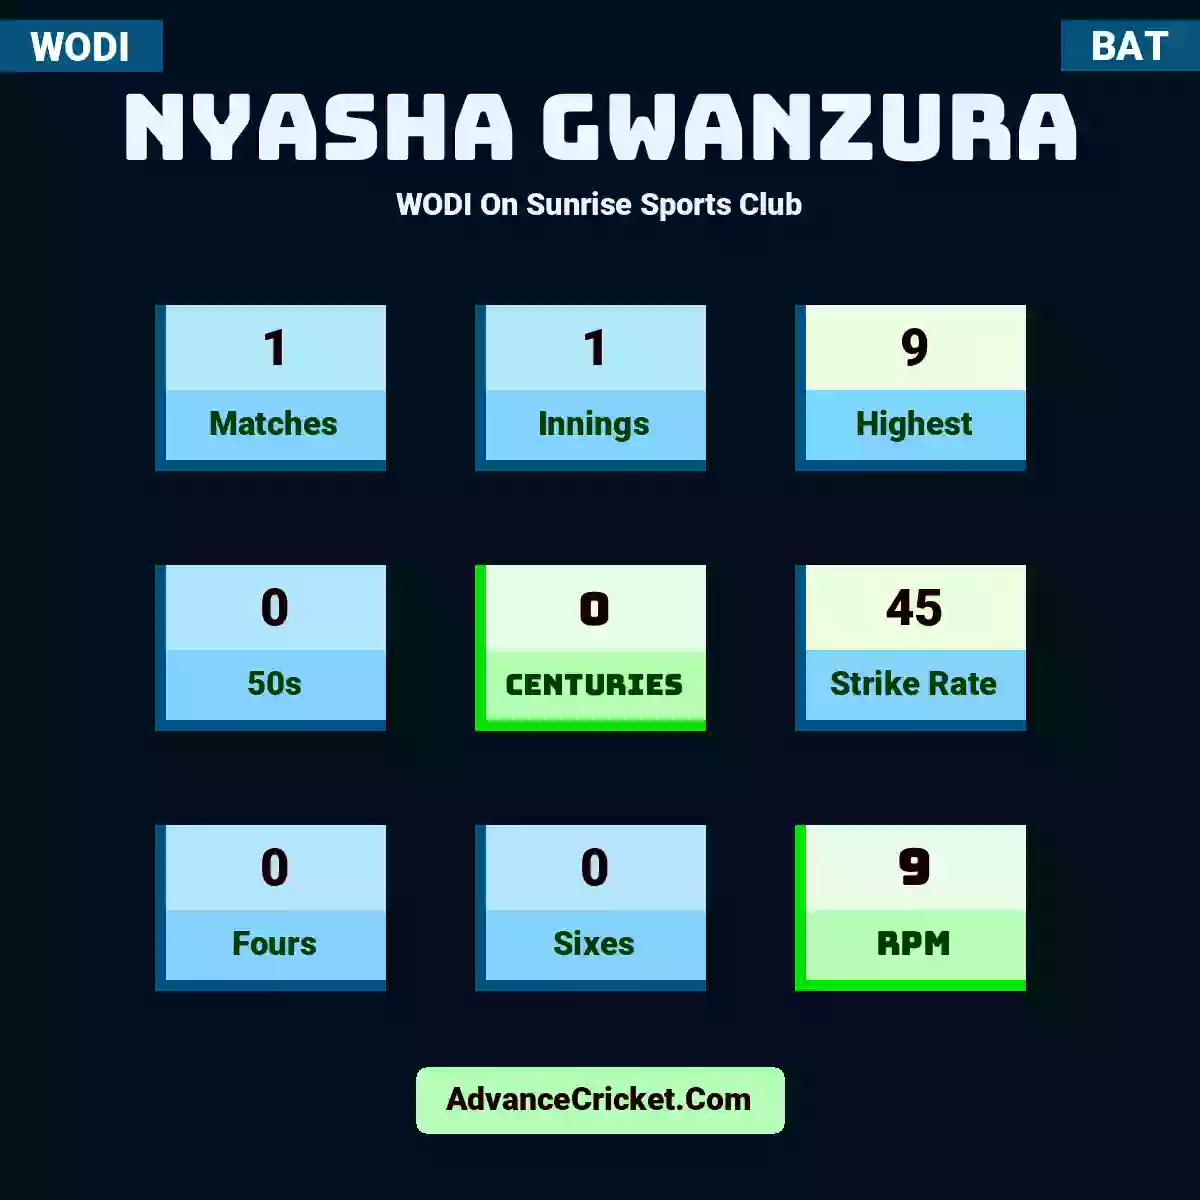 Nyasha Gwanzura WODI  On Sunrise Sports Club, Nyasha Gwanzura played 1 matches, scored 9 runs as highest, 0 half-centuries, and 0 centuries, with a strike rate of 45. N.Gwanzura hit 0 fours and 0 sixes, with an RPM of 9.